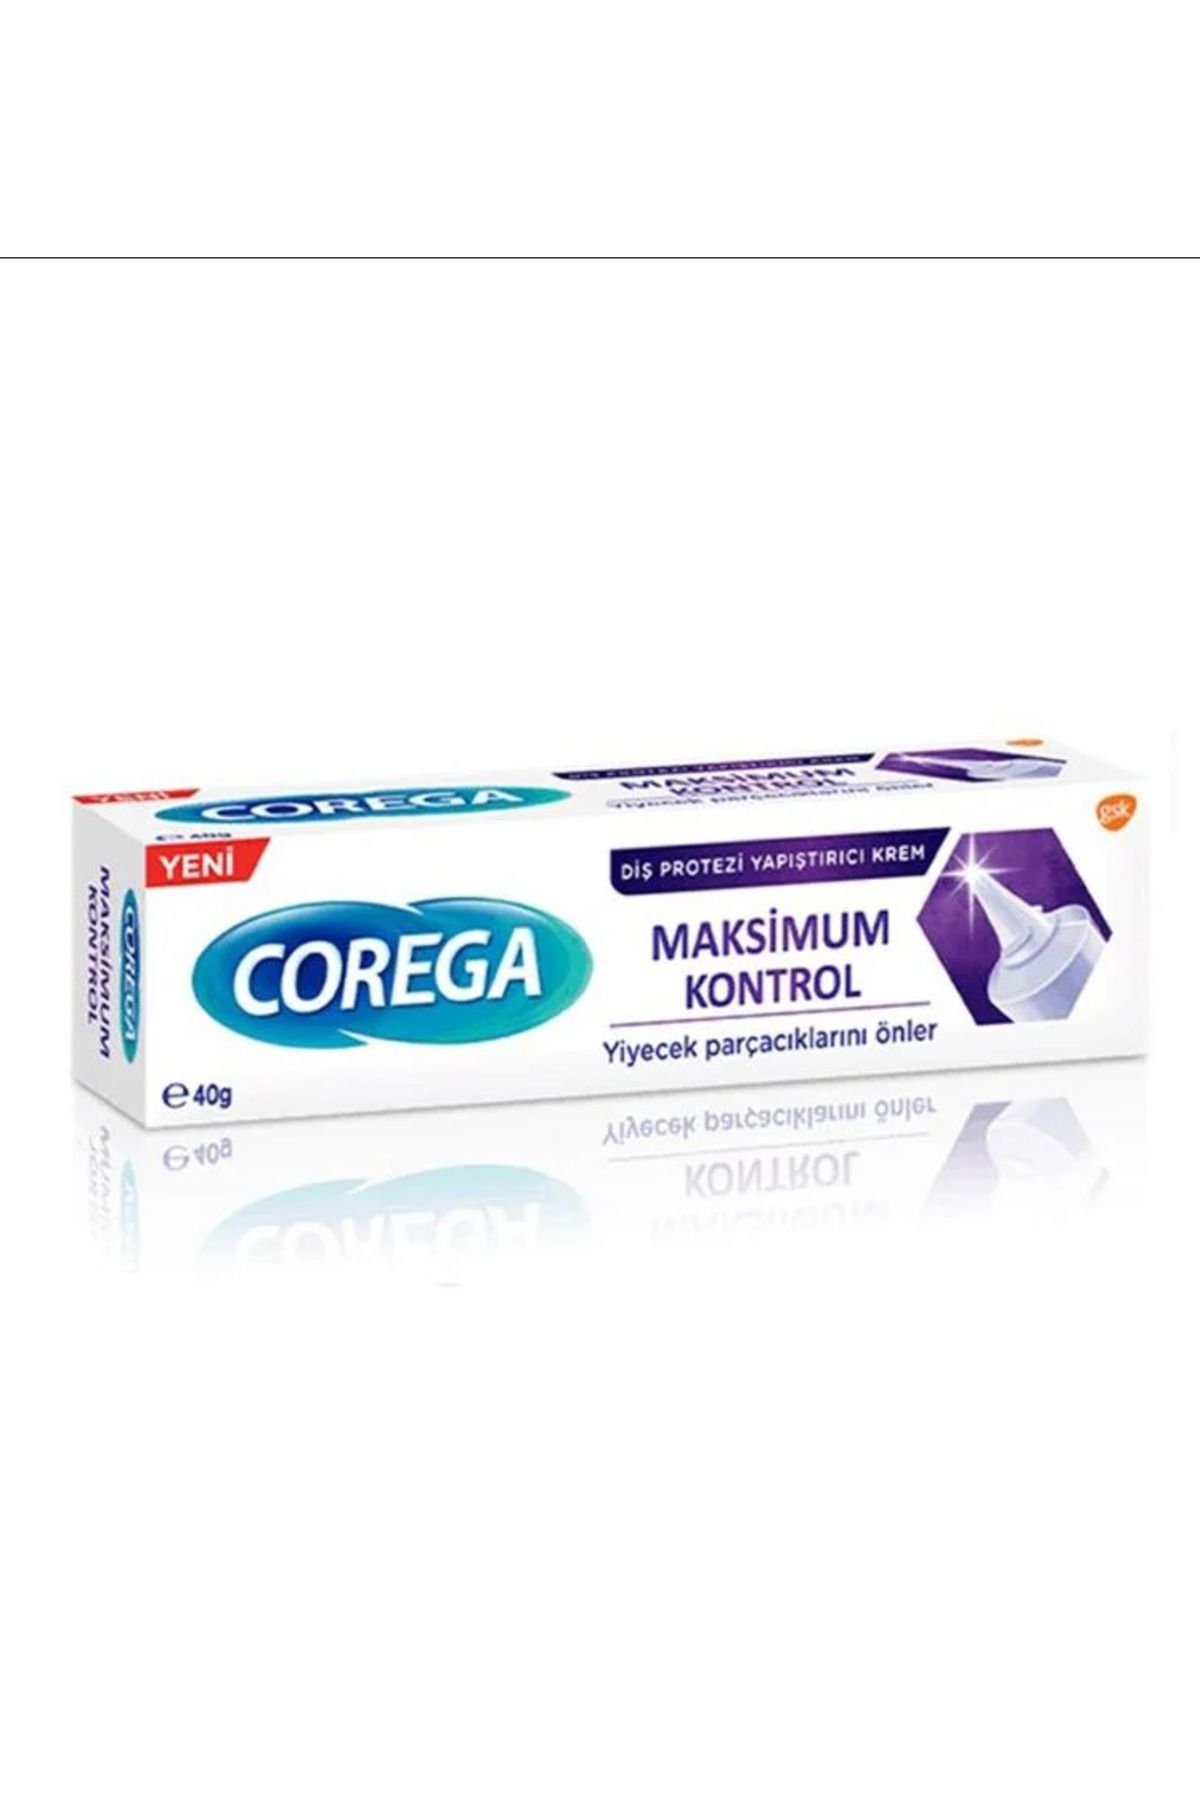 Corega Maximum Kontrol Diş Protezi Yapıştırıcı Krem 40 ml-MFREYON00417